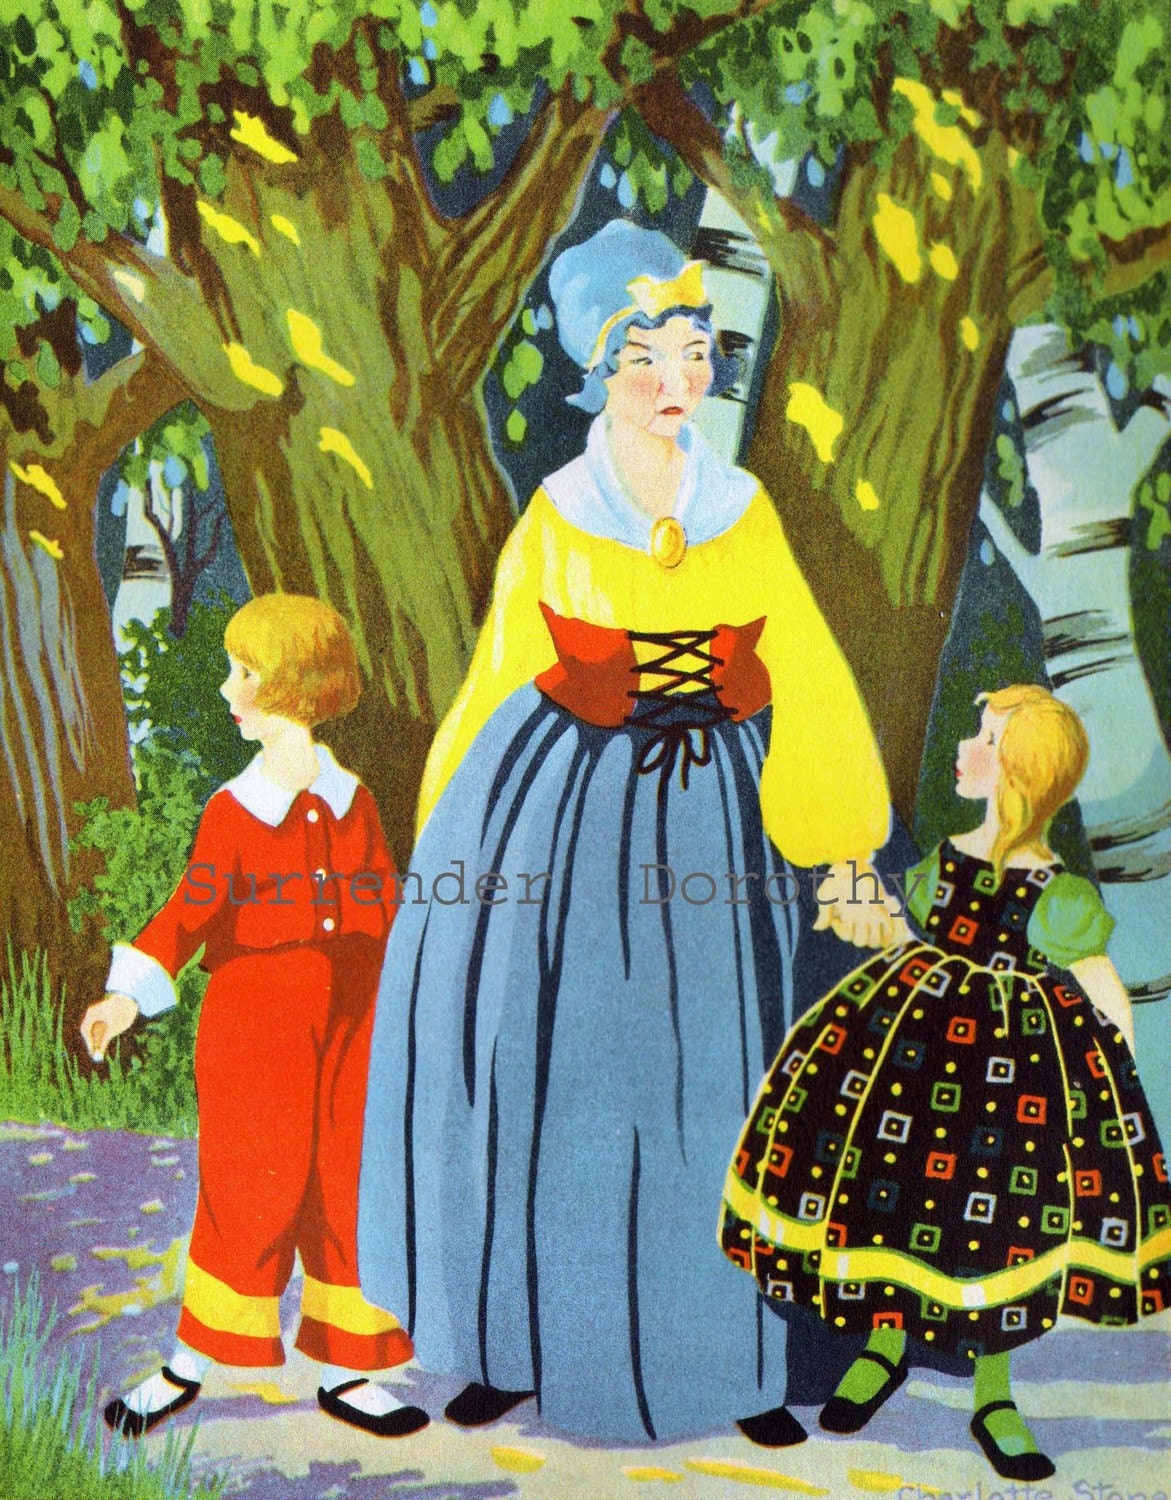 Hansel and Gretel Illustrations – Charlotte Steel